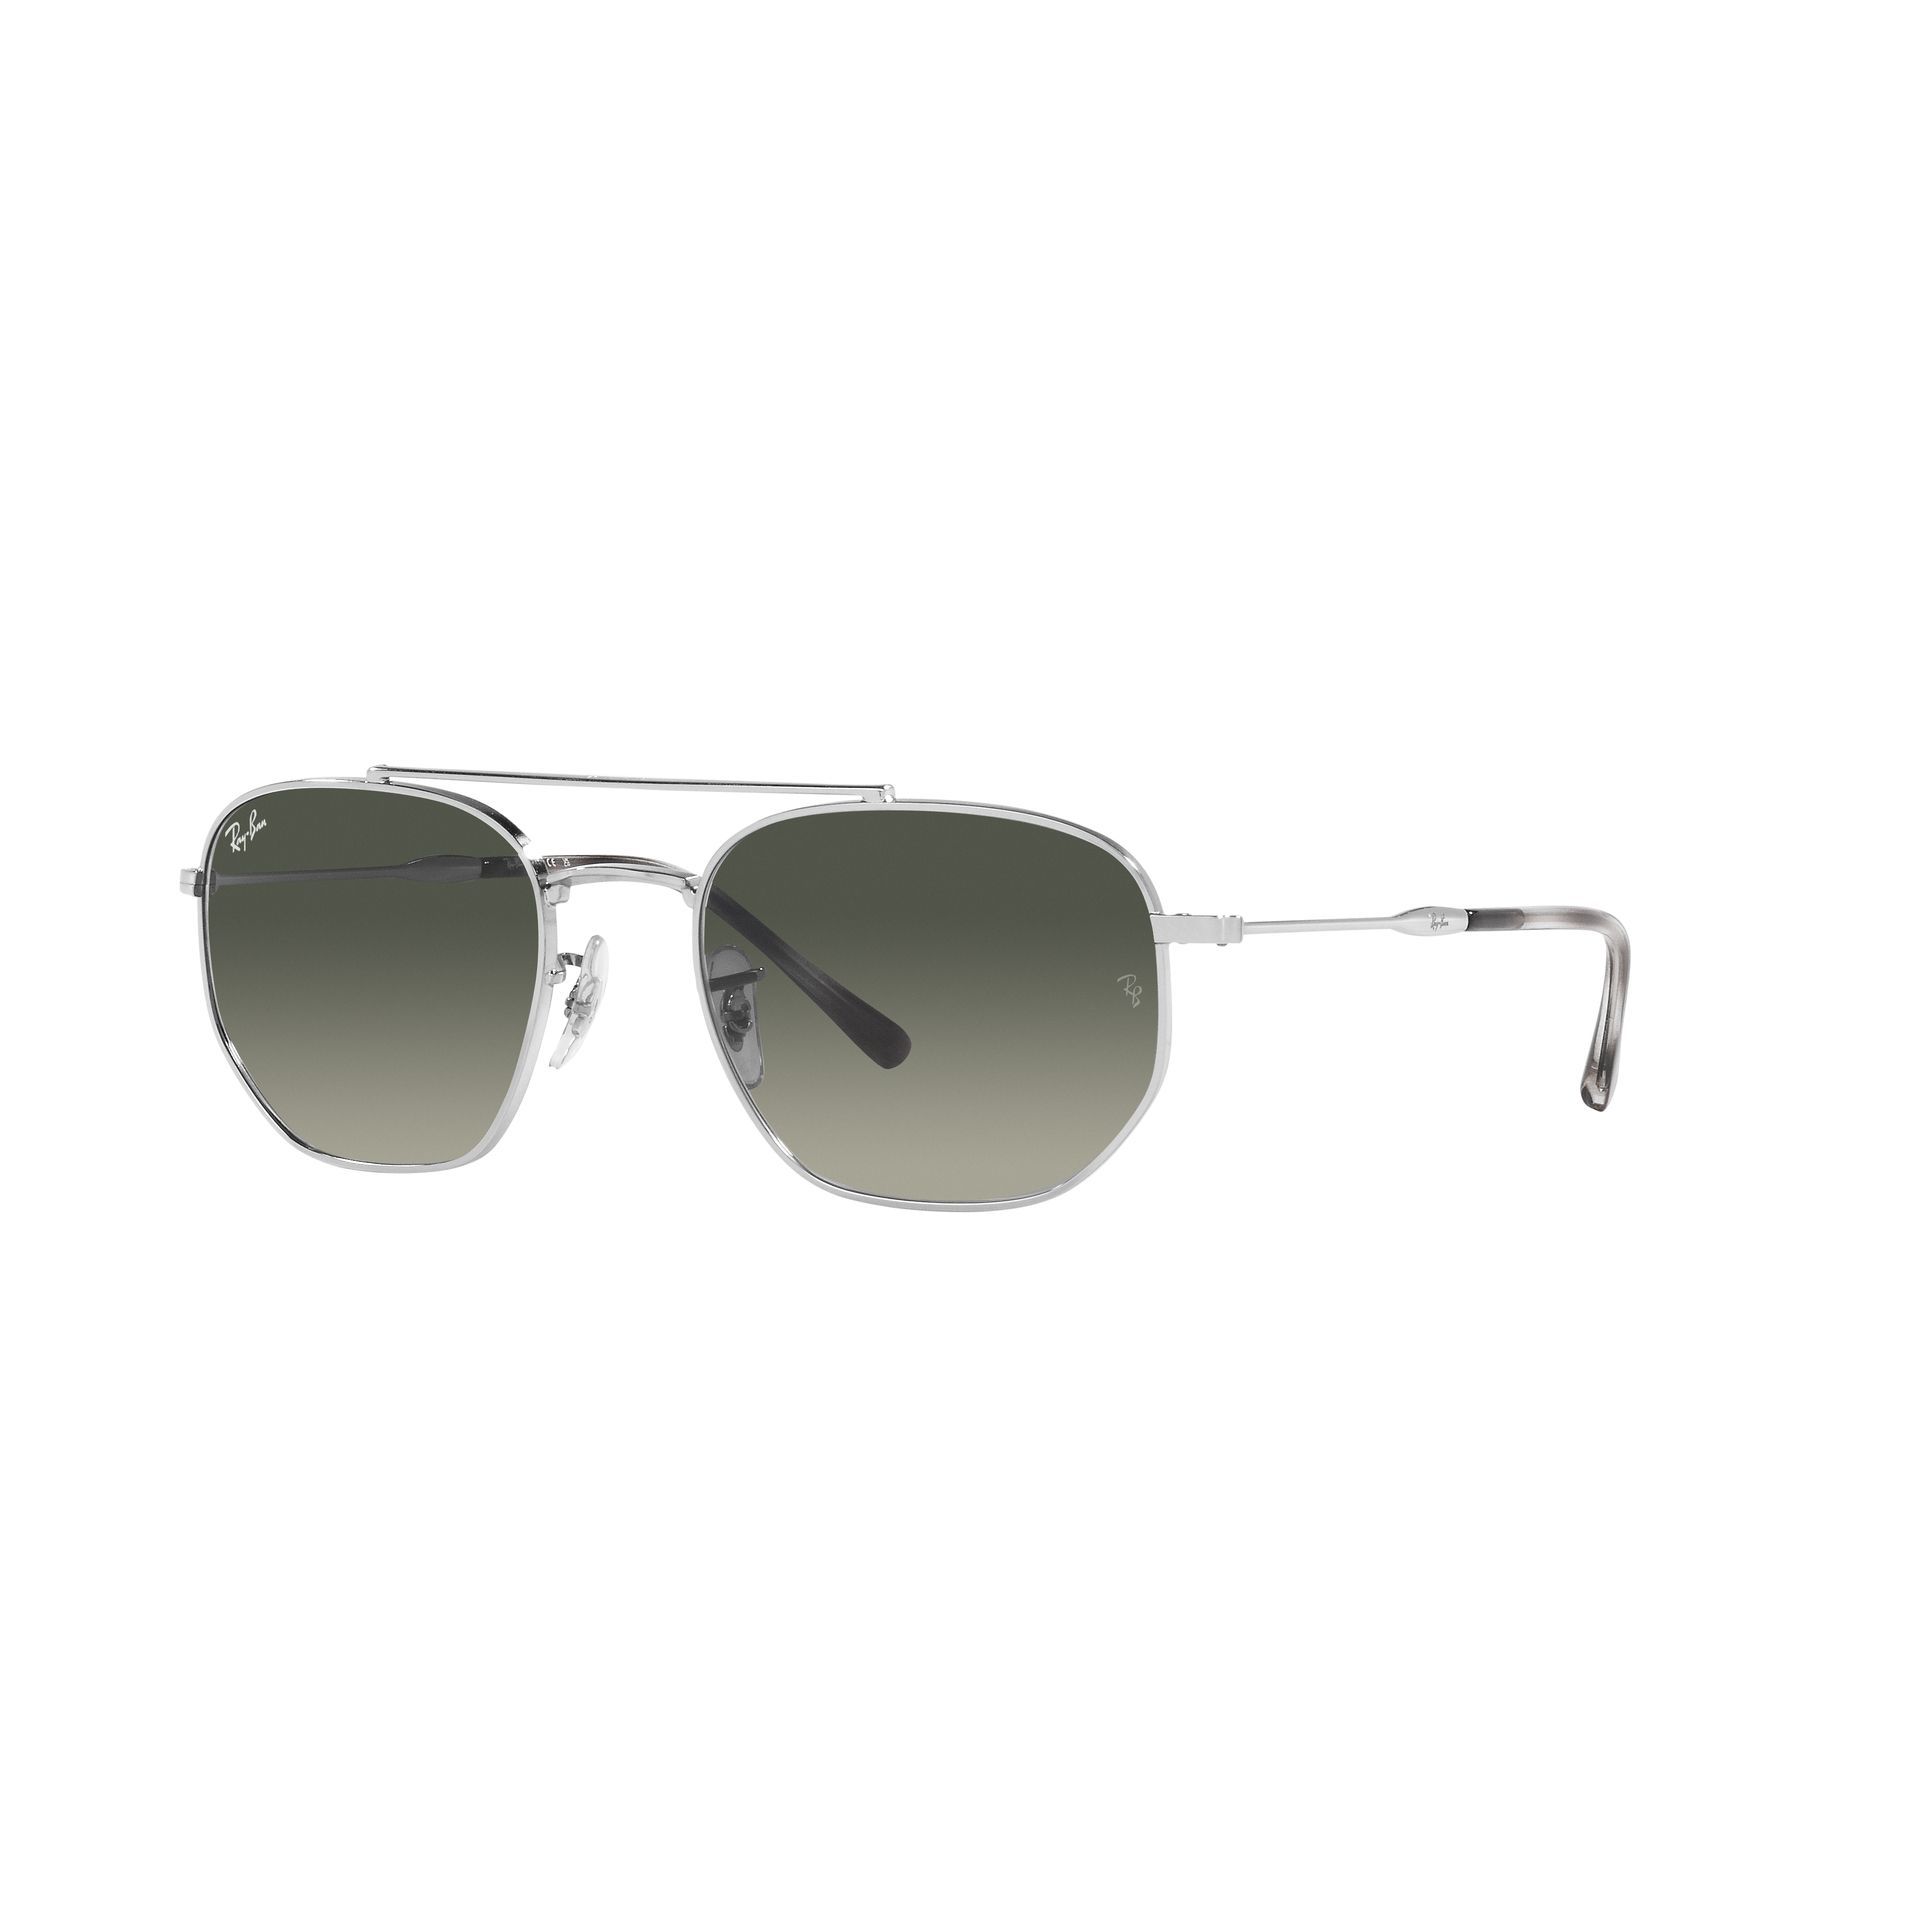 0RB3707 Irregular Sunglasses 003 71 - size 54